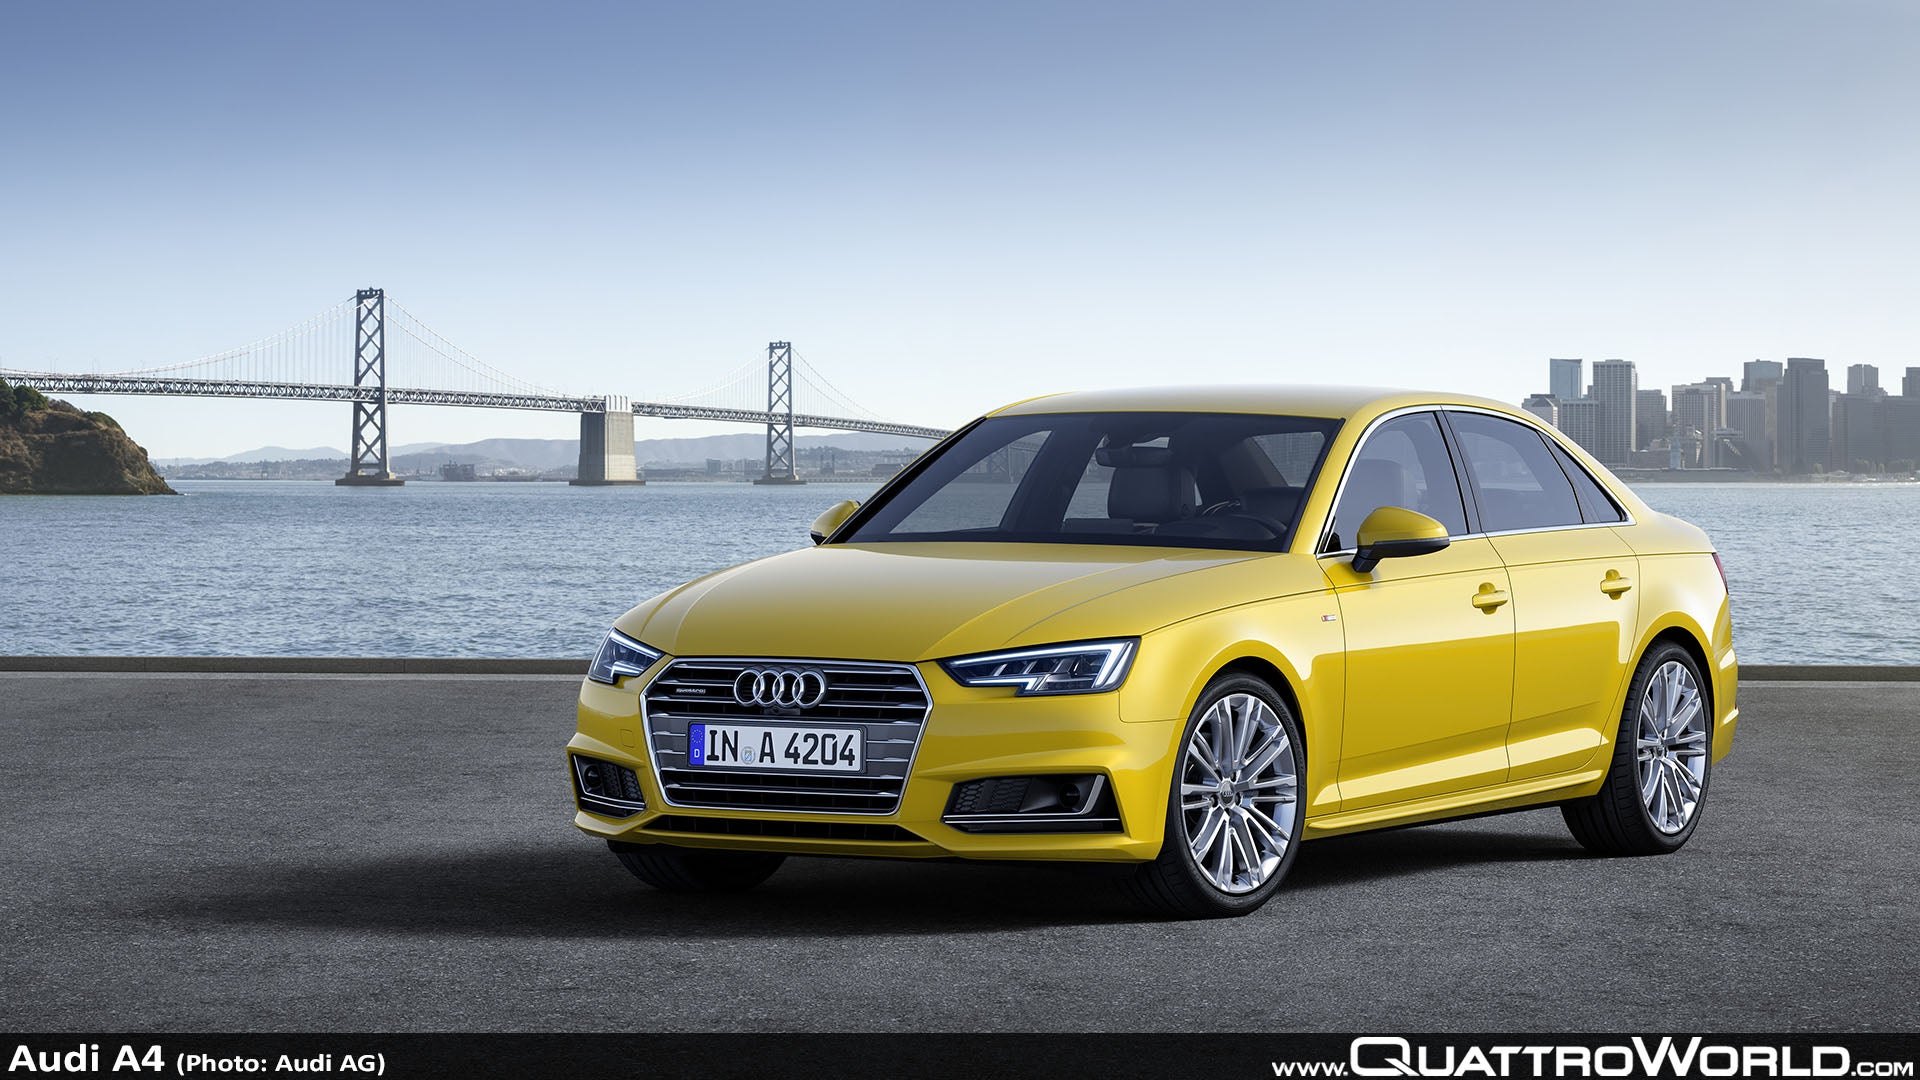 klodset i tilfælde af Mediator High tech all the way – the new Audi A4 and A4 Avant - QuattroWorld